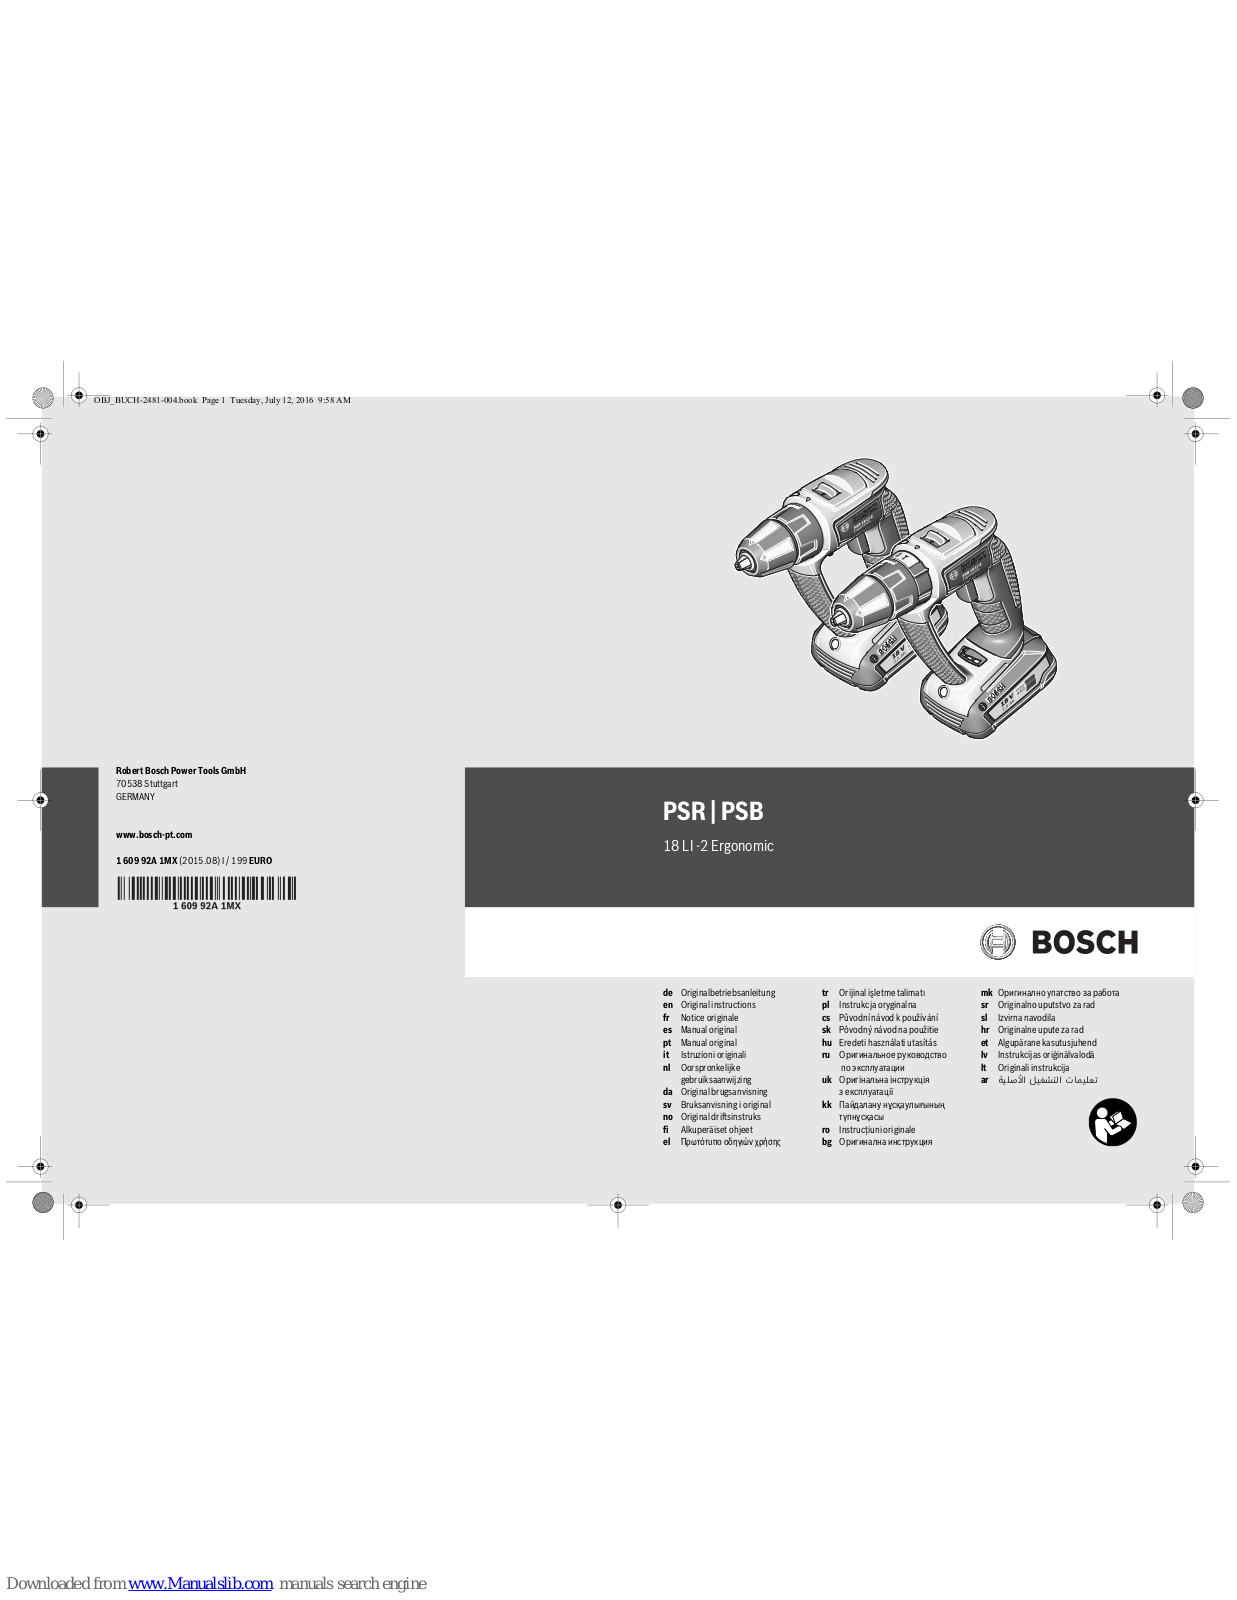 Bosch PSB 18 LI -2 Ergonomic, PSR 18 LI -2 Ergonomic Original Instructions Manual